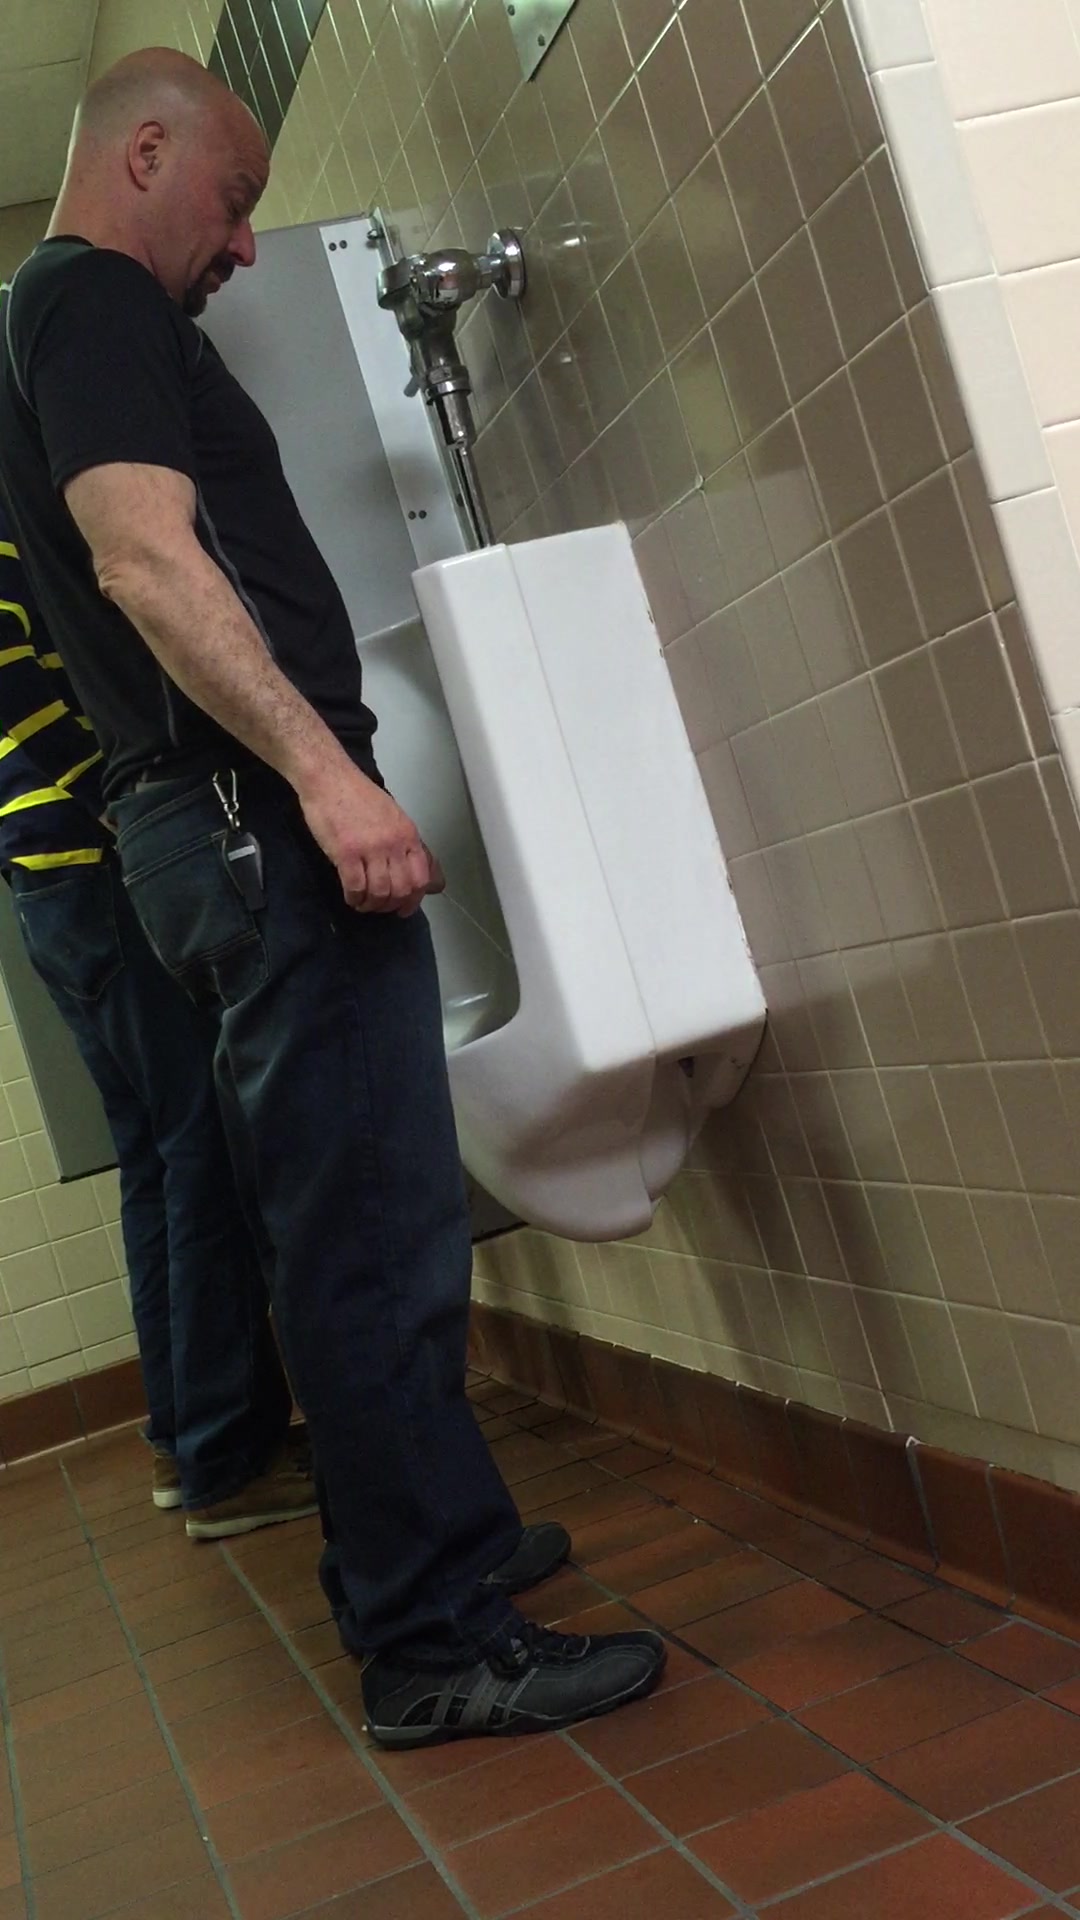 public urinal voyeur jerk video